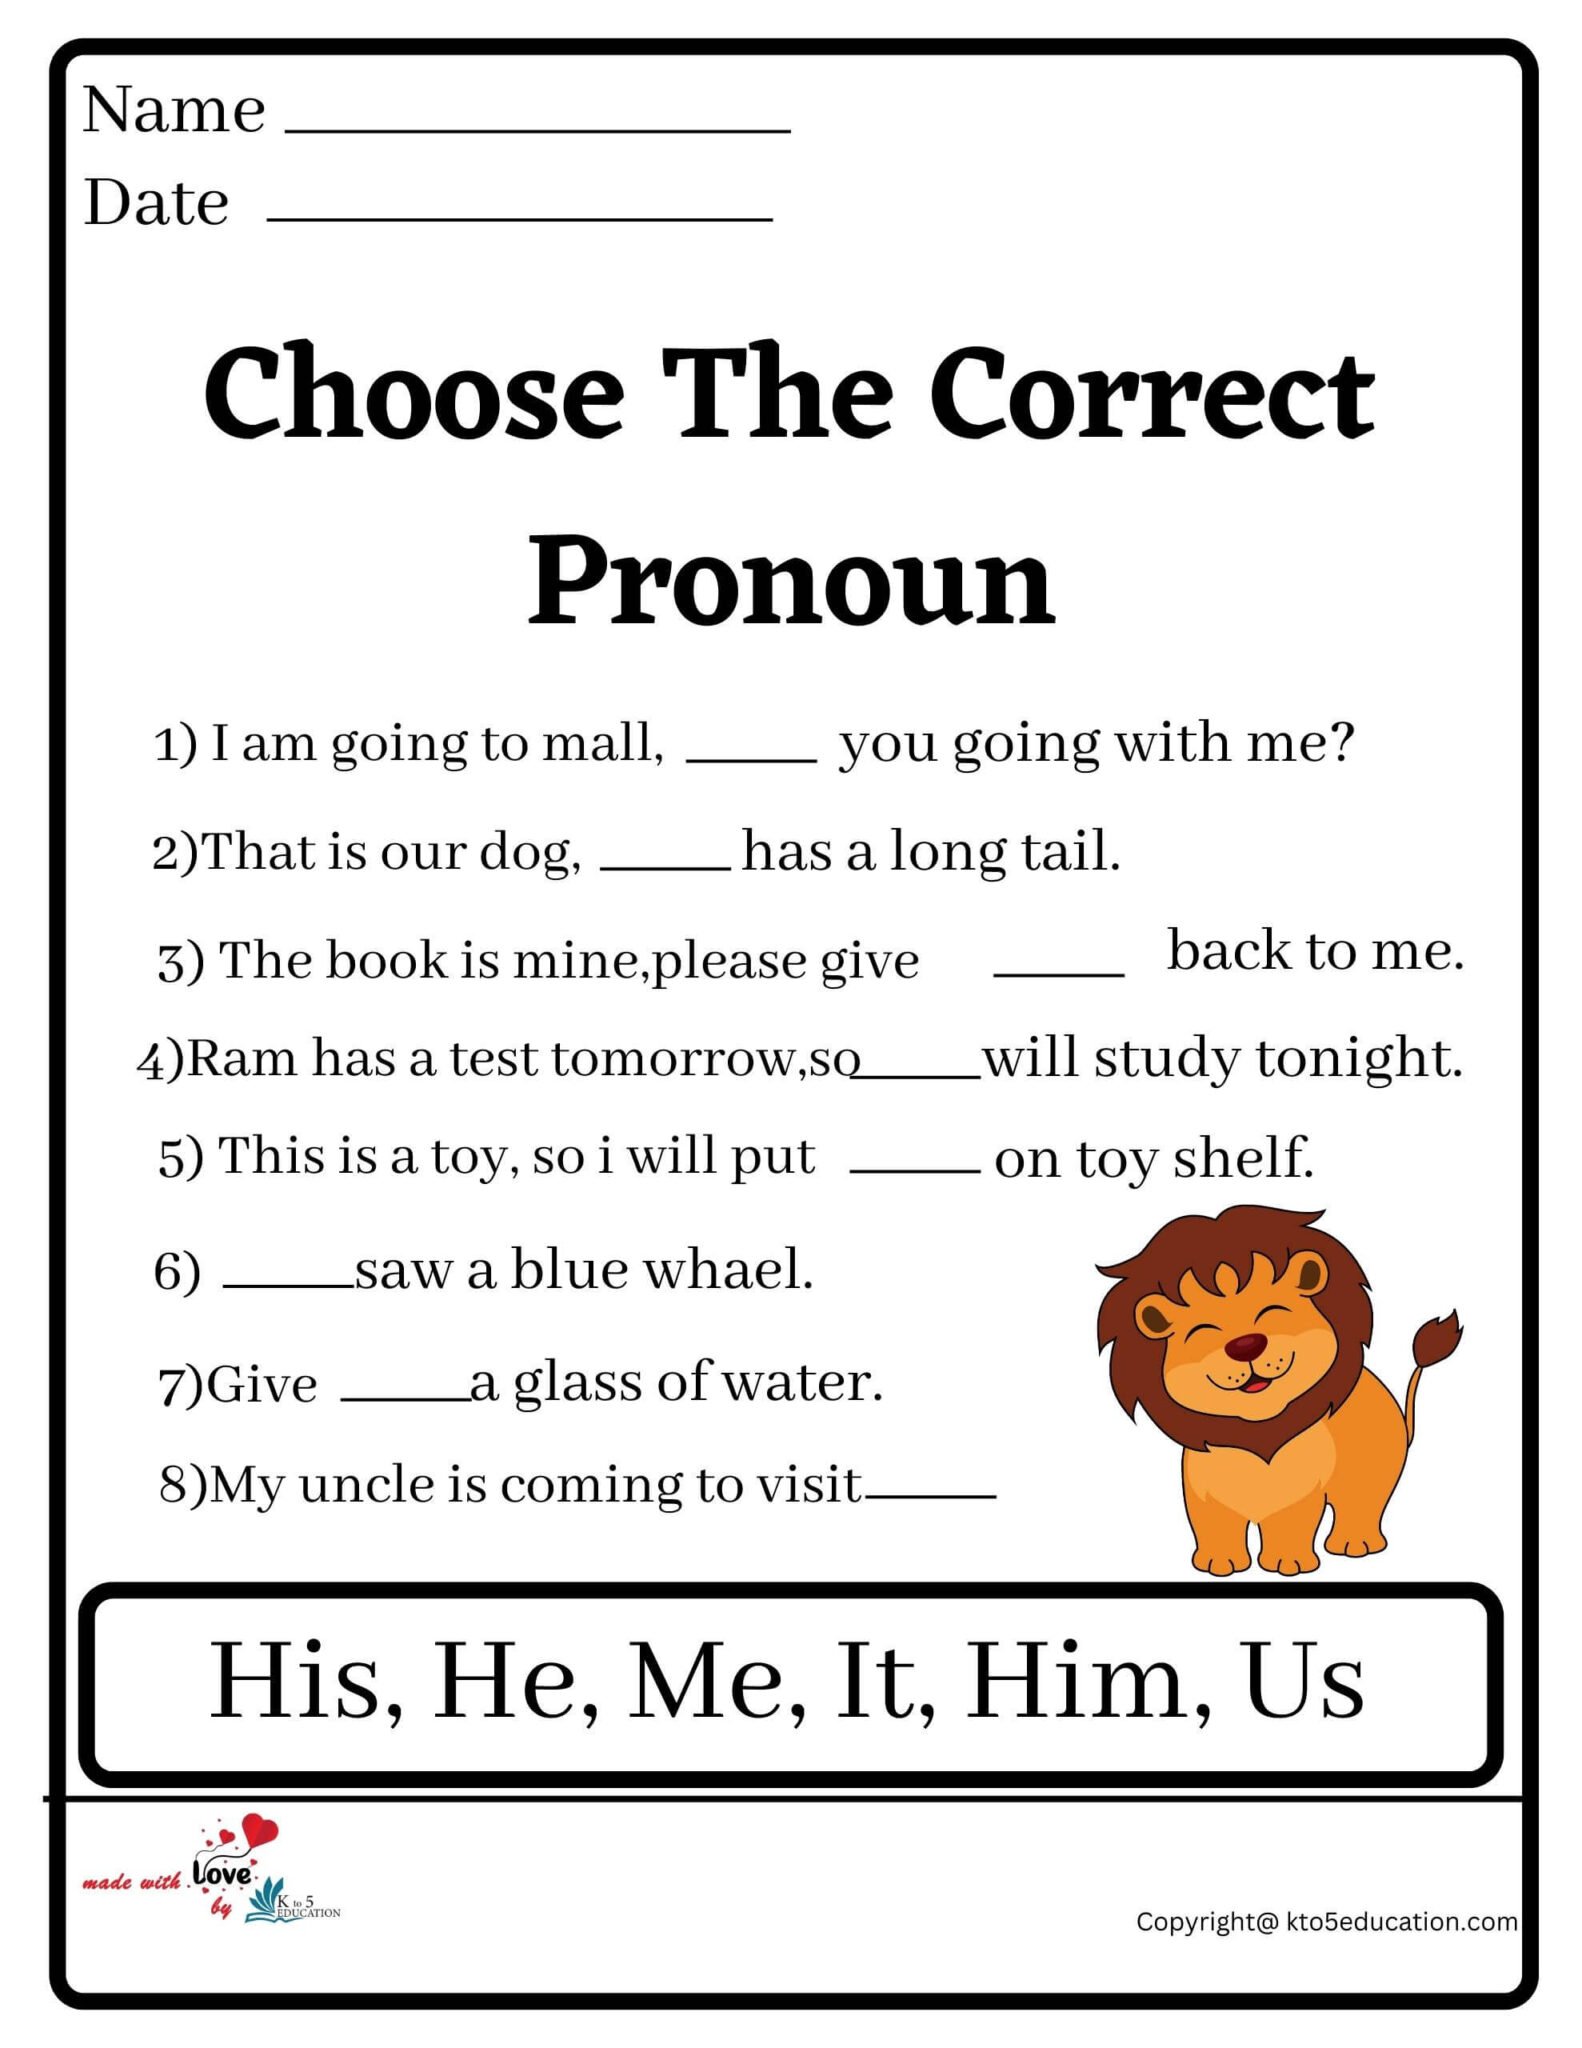 choose-the-correct-pronoun-worksheet-free-download